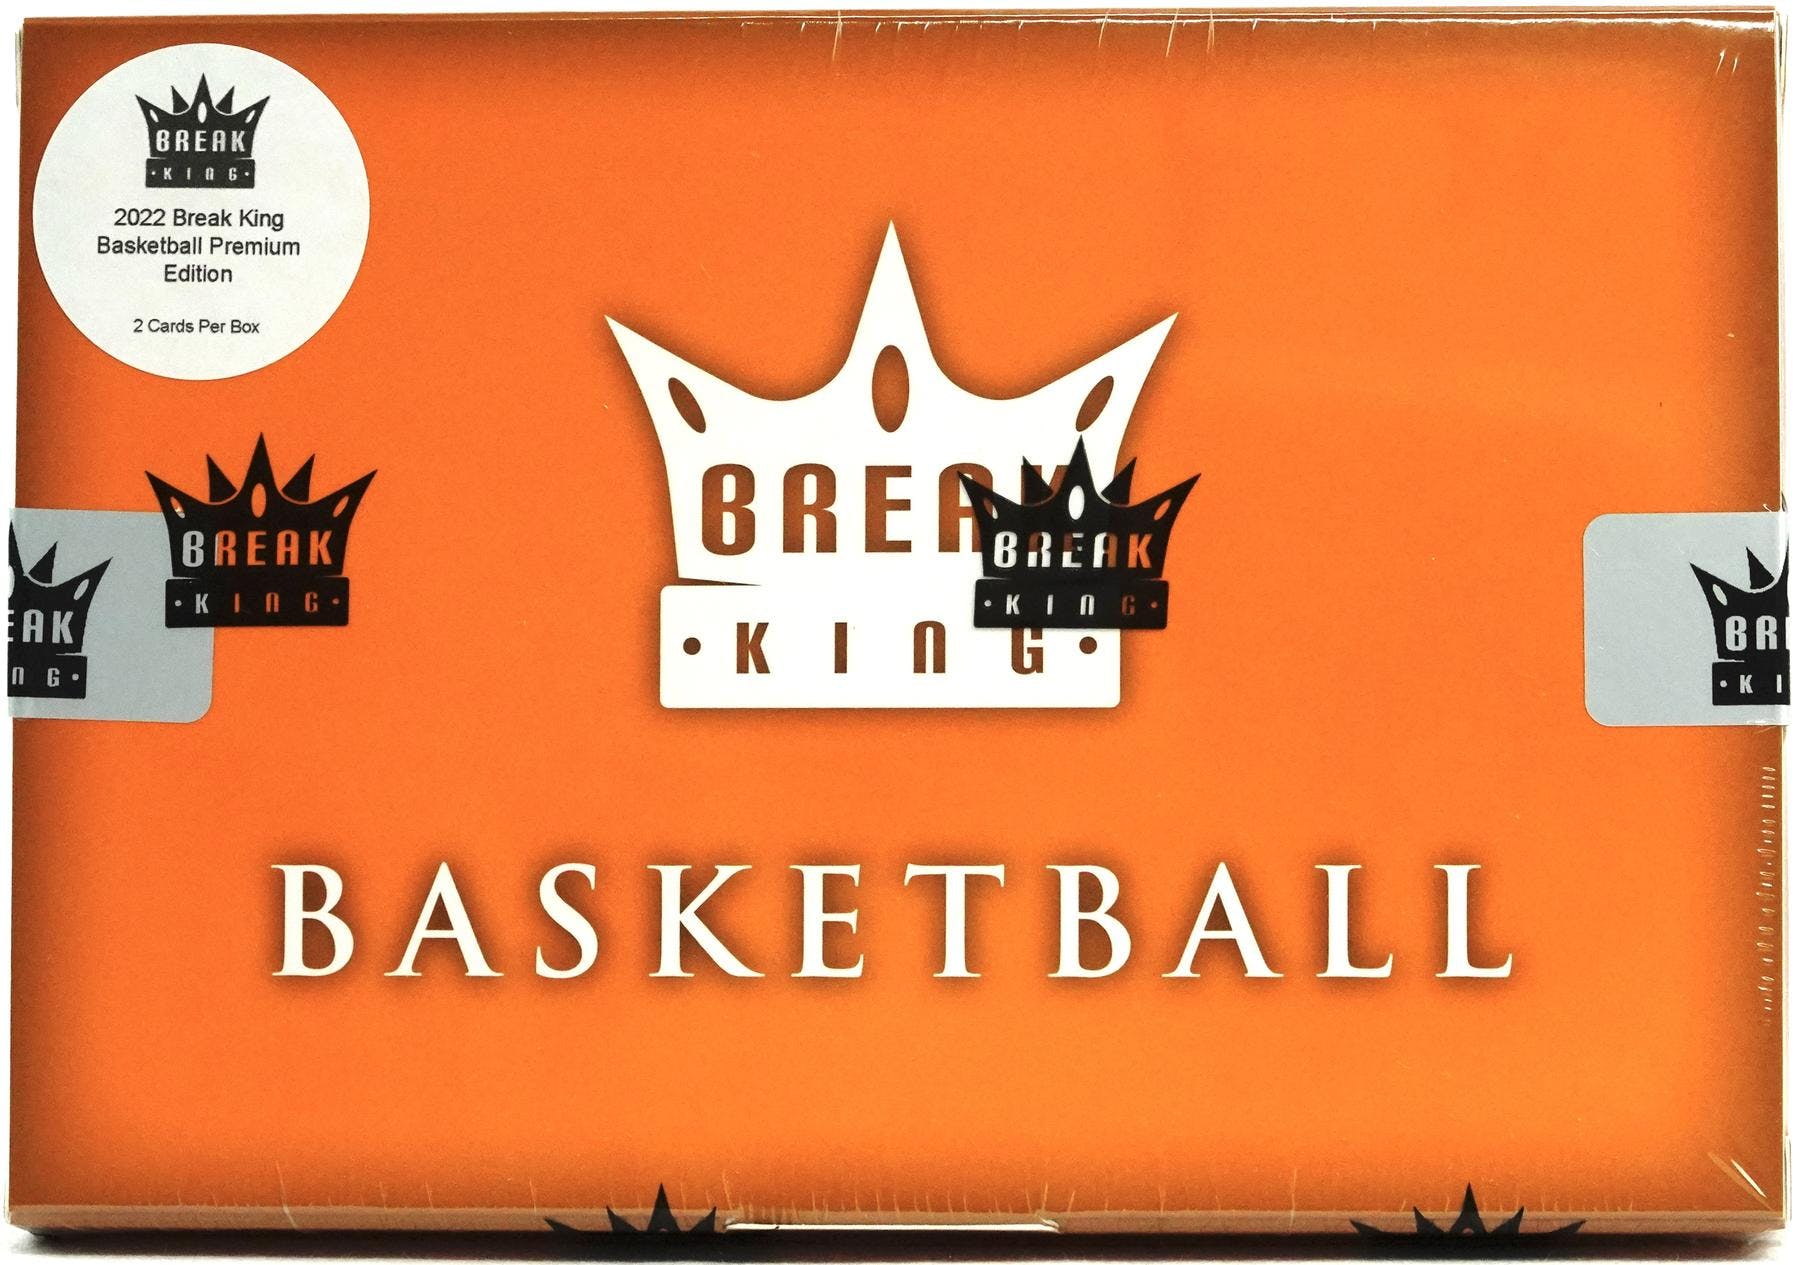 2022 Break King Basketball Premium Edition Box